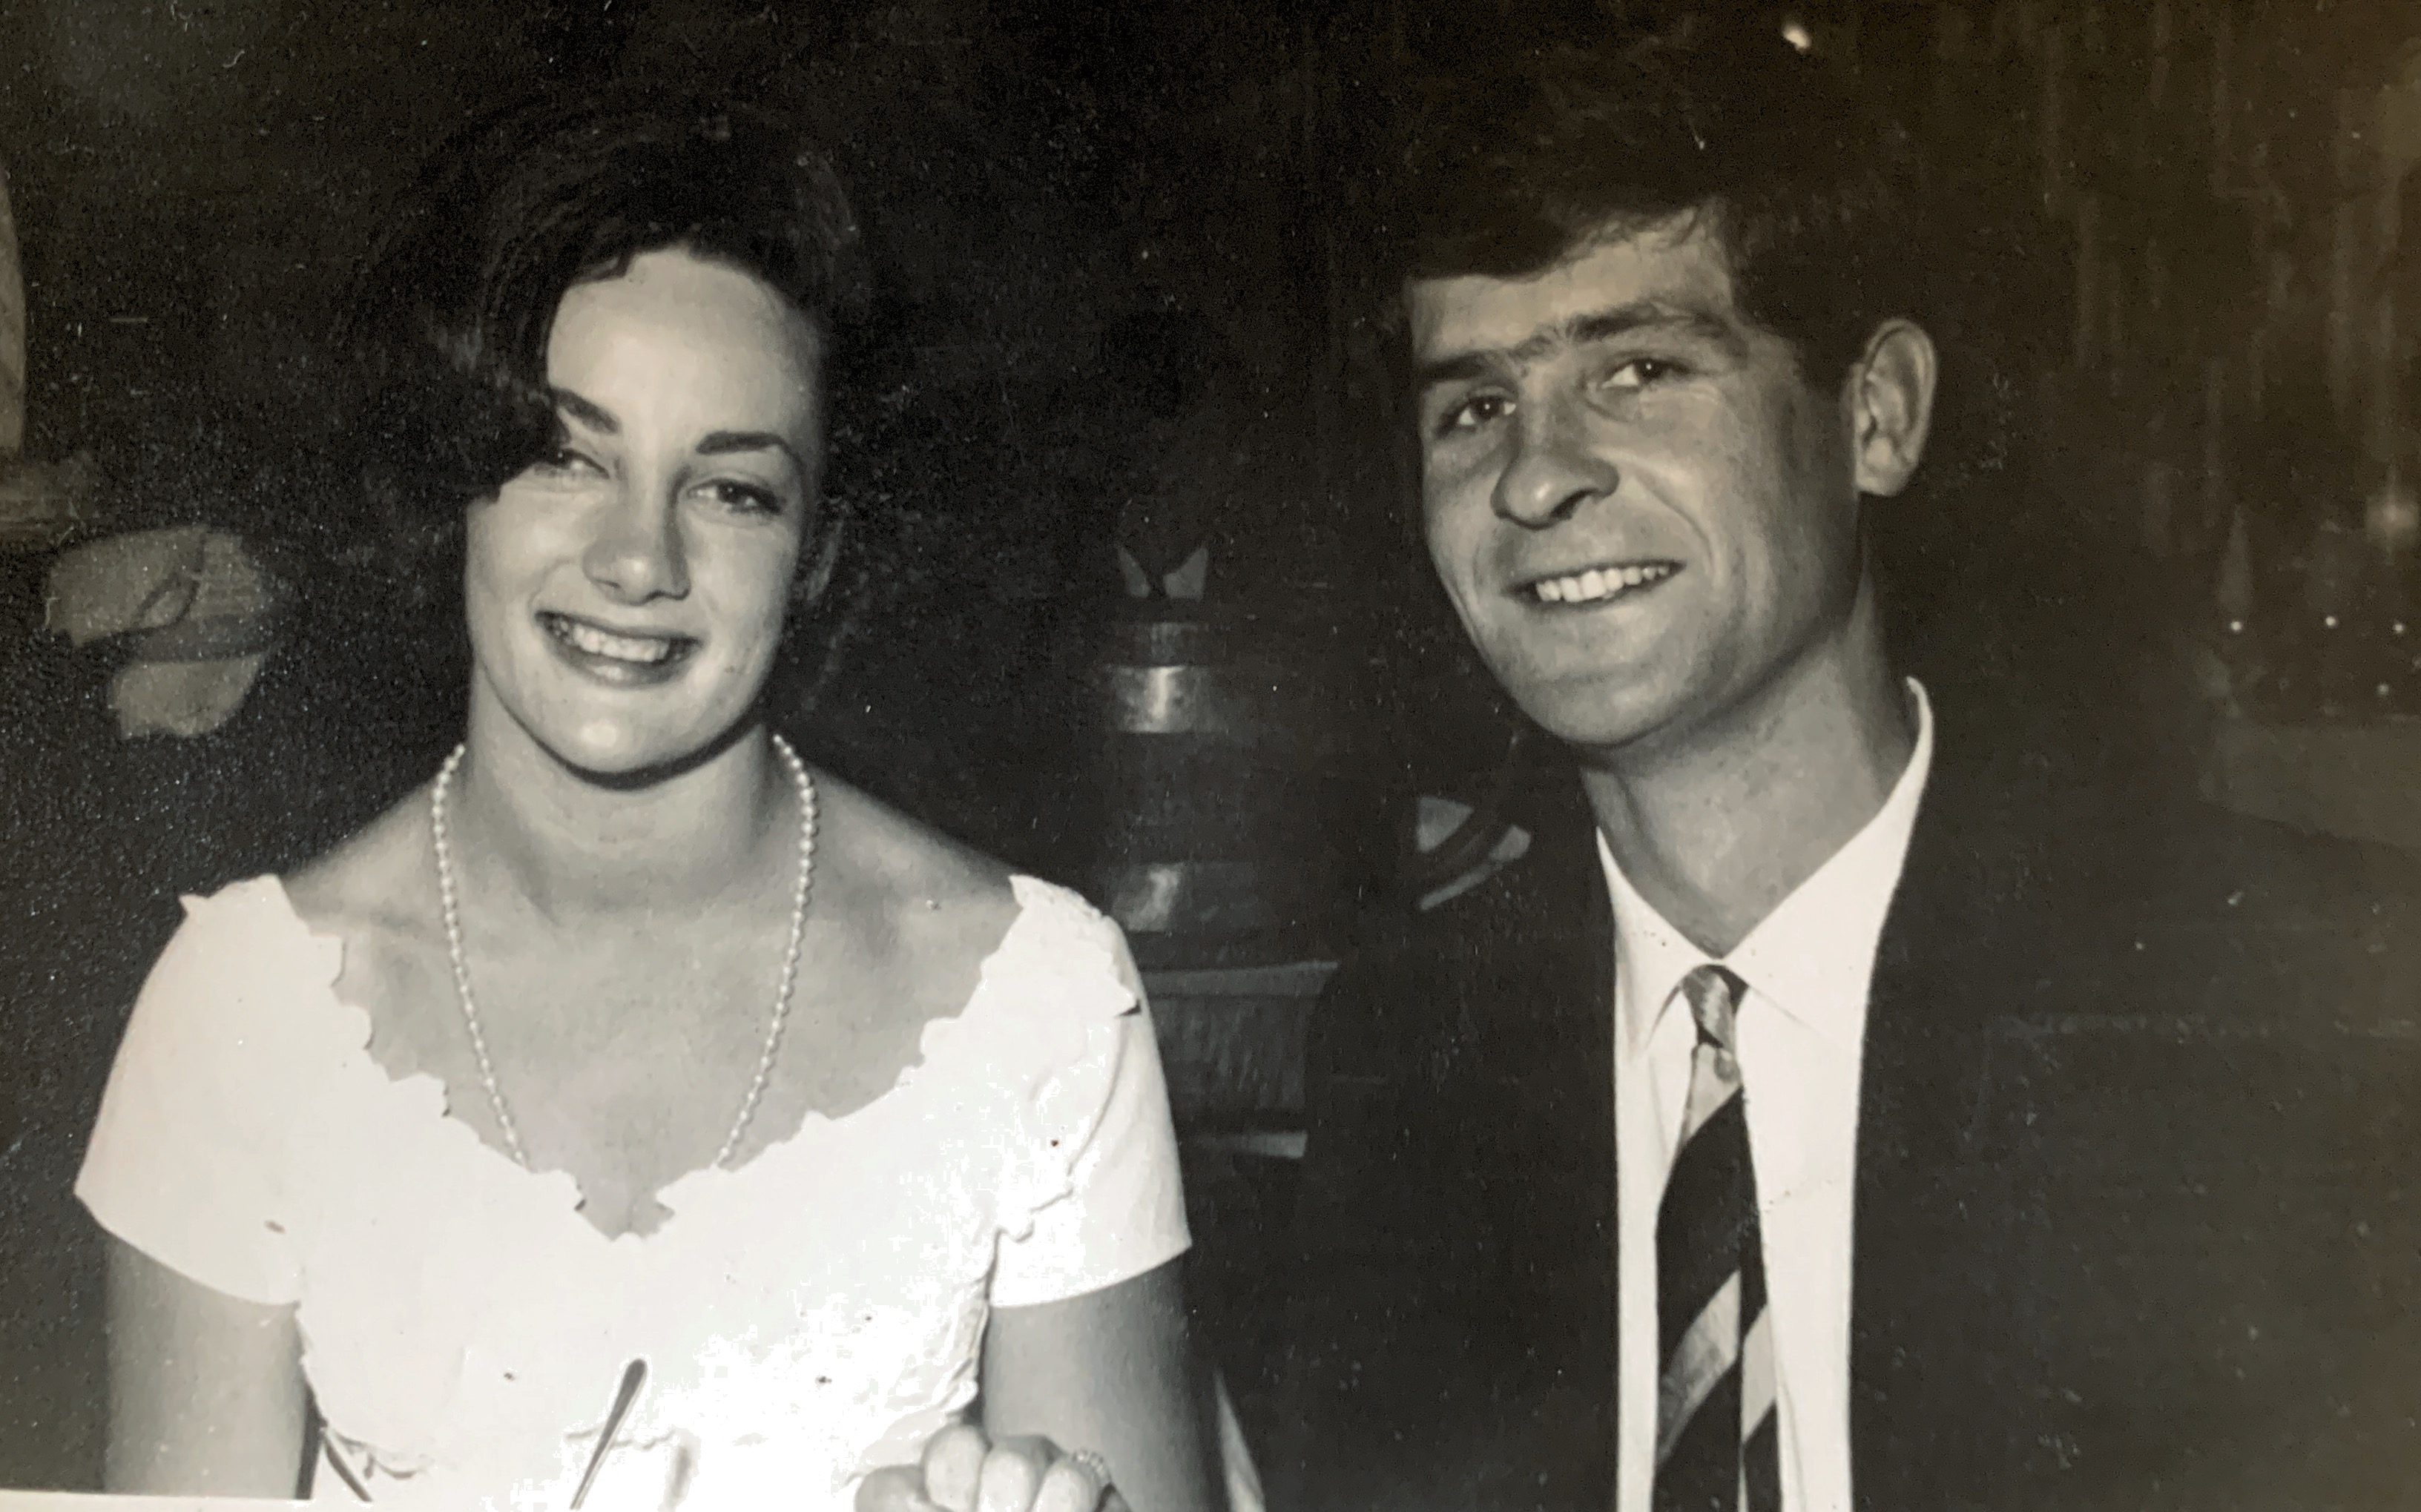 Judy and Tony’s wedding in 1964